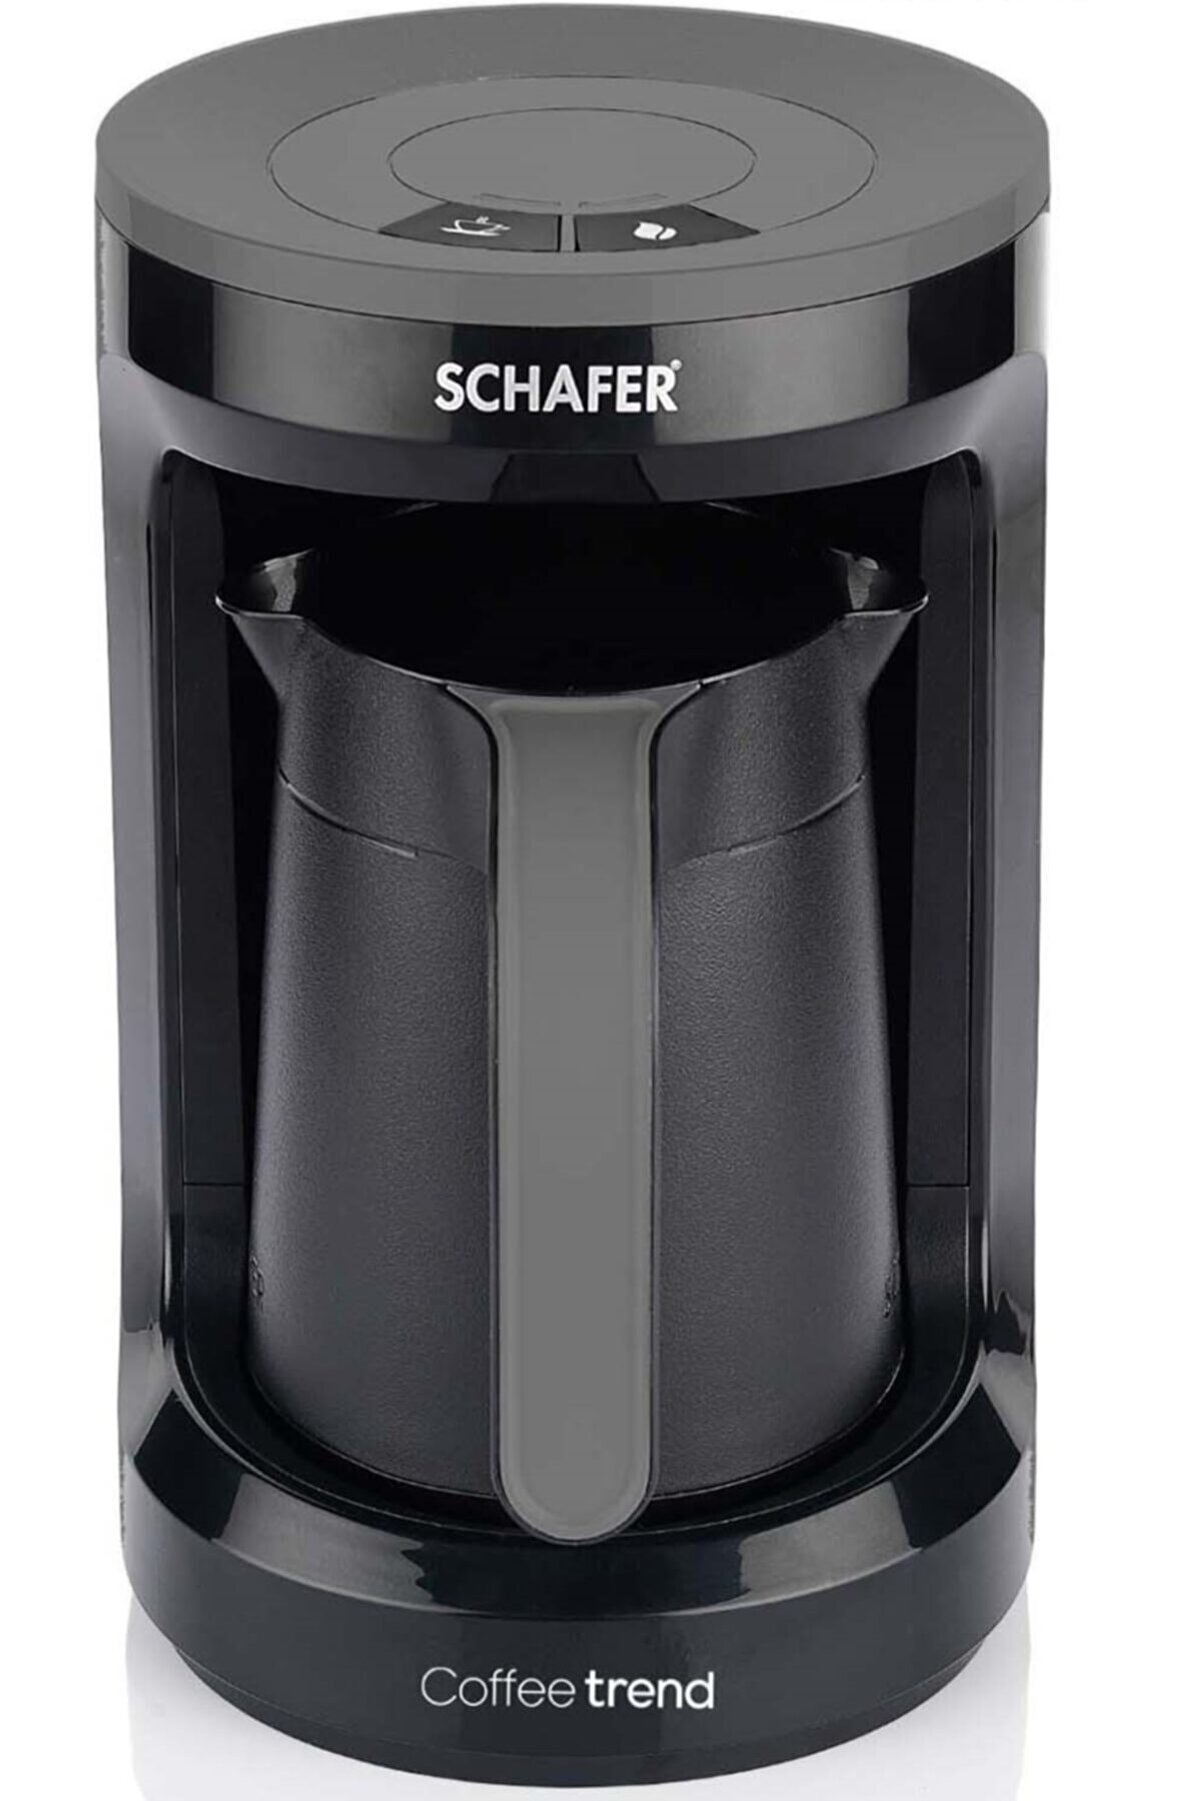 Schafer Coffee Trend Türk Kahve Makinesi - Siyah